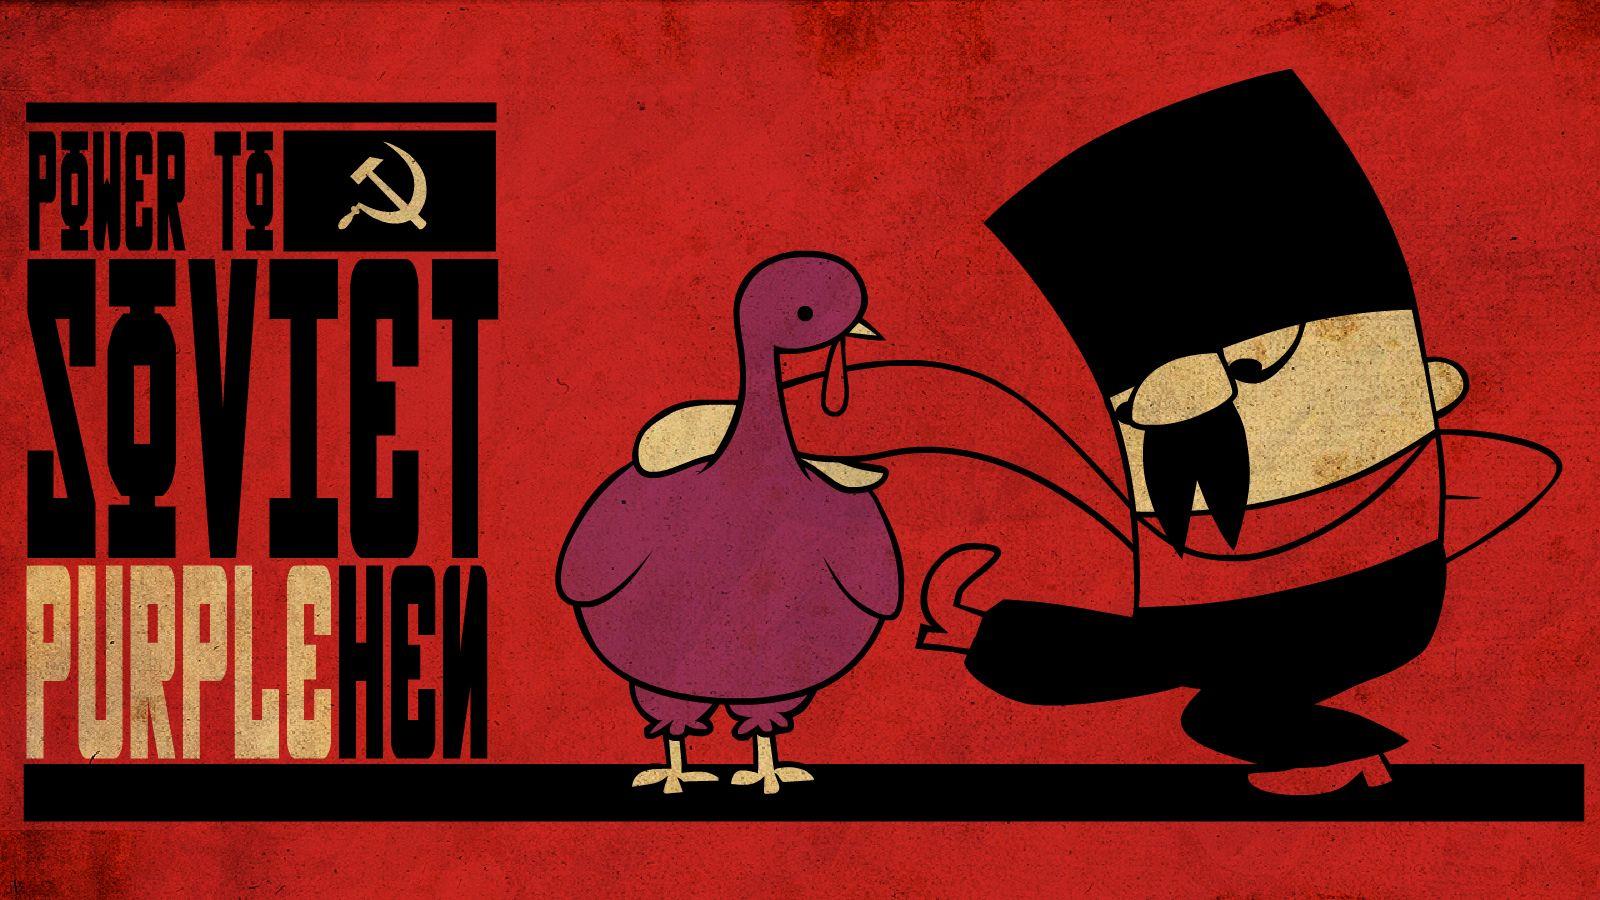 Download the Soviet Purple Hen Wallpaper, Soviet Purple Hen iPhone